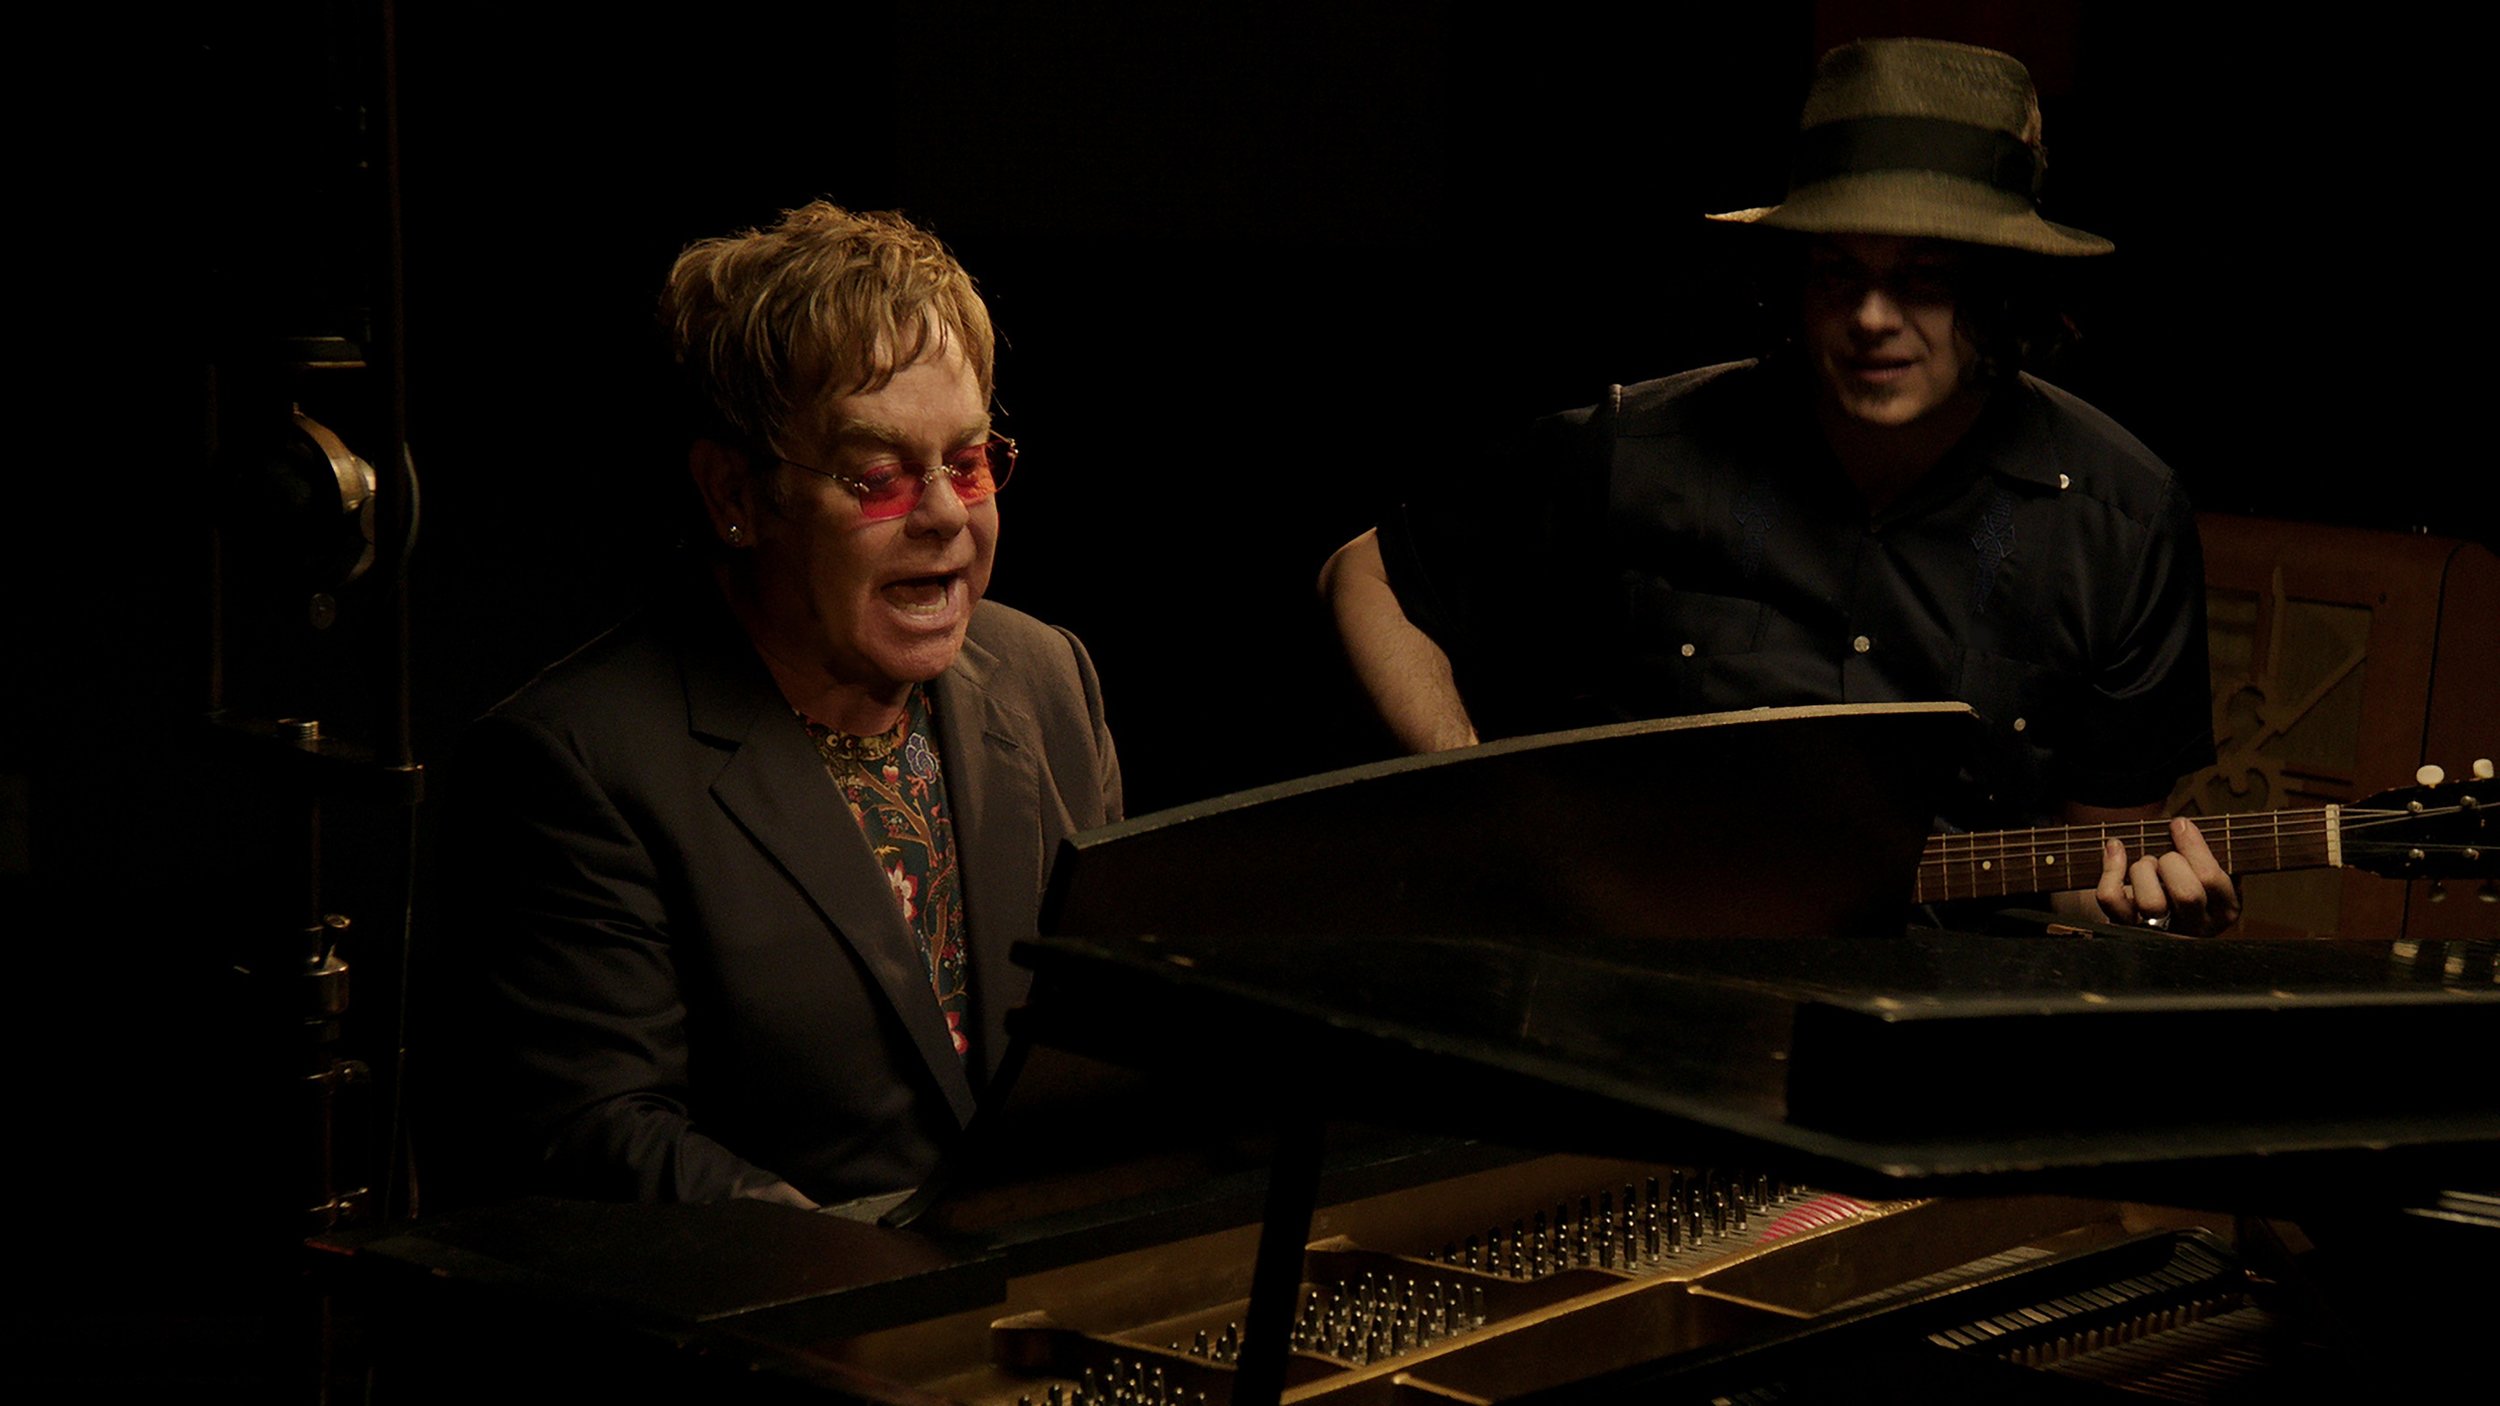 Elton John and Jack White - "Two Finger of Whiskey"